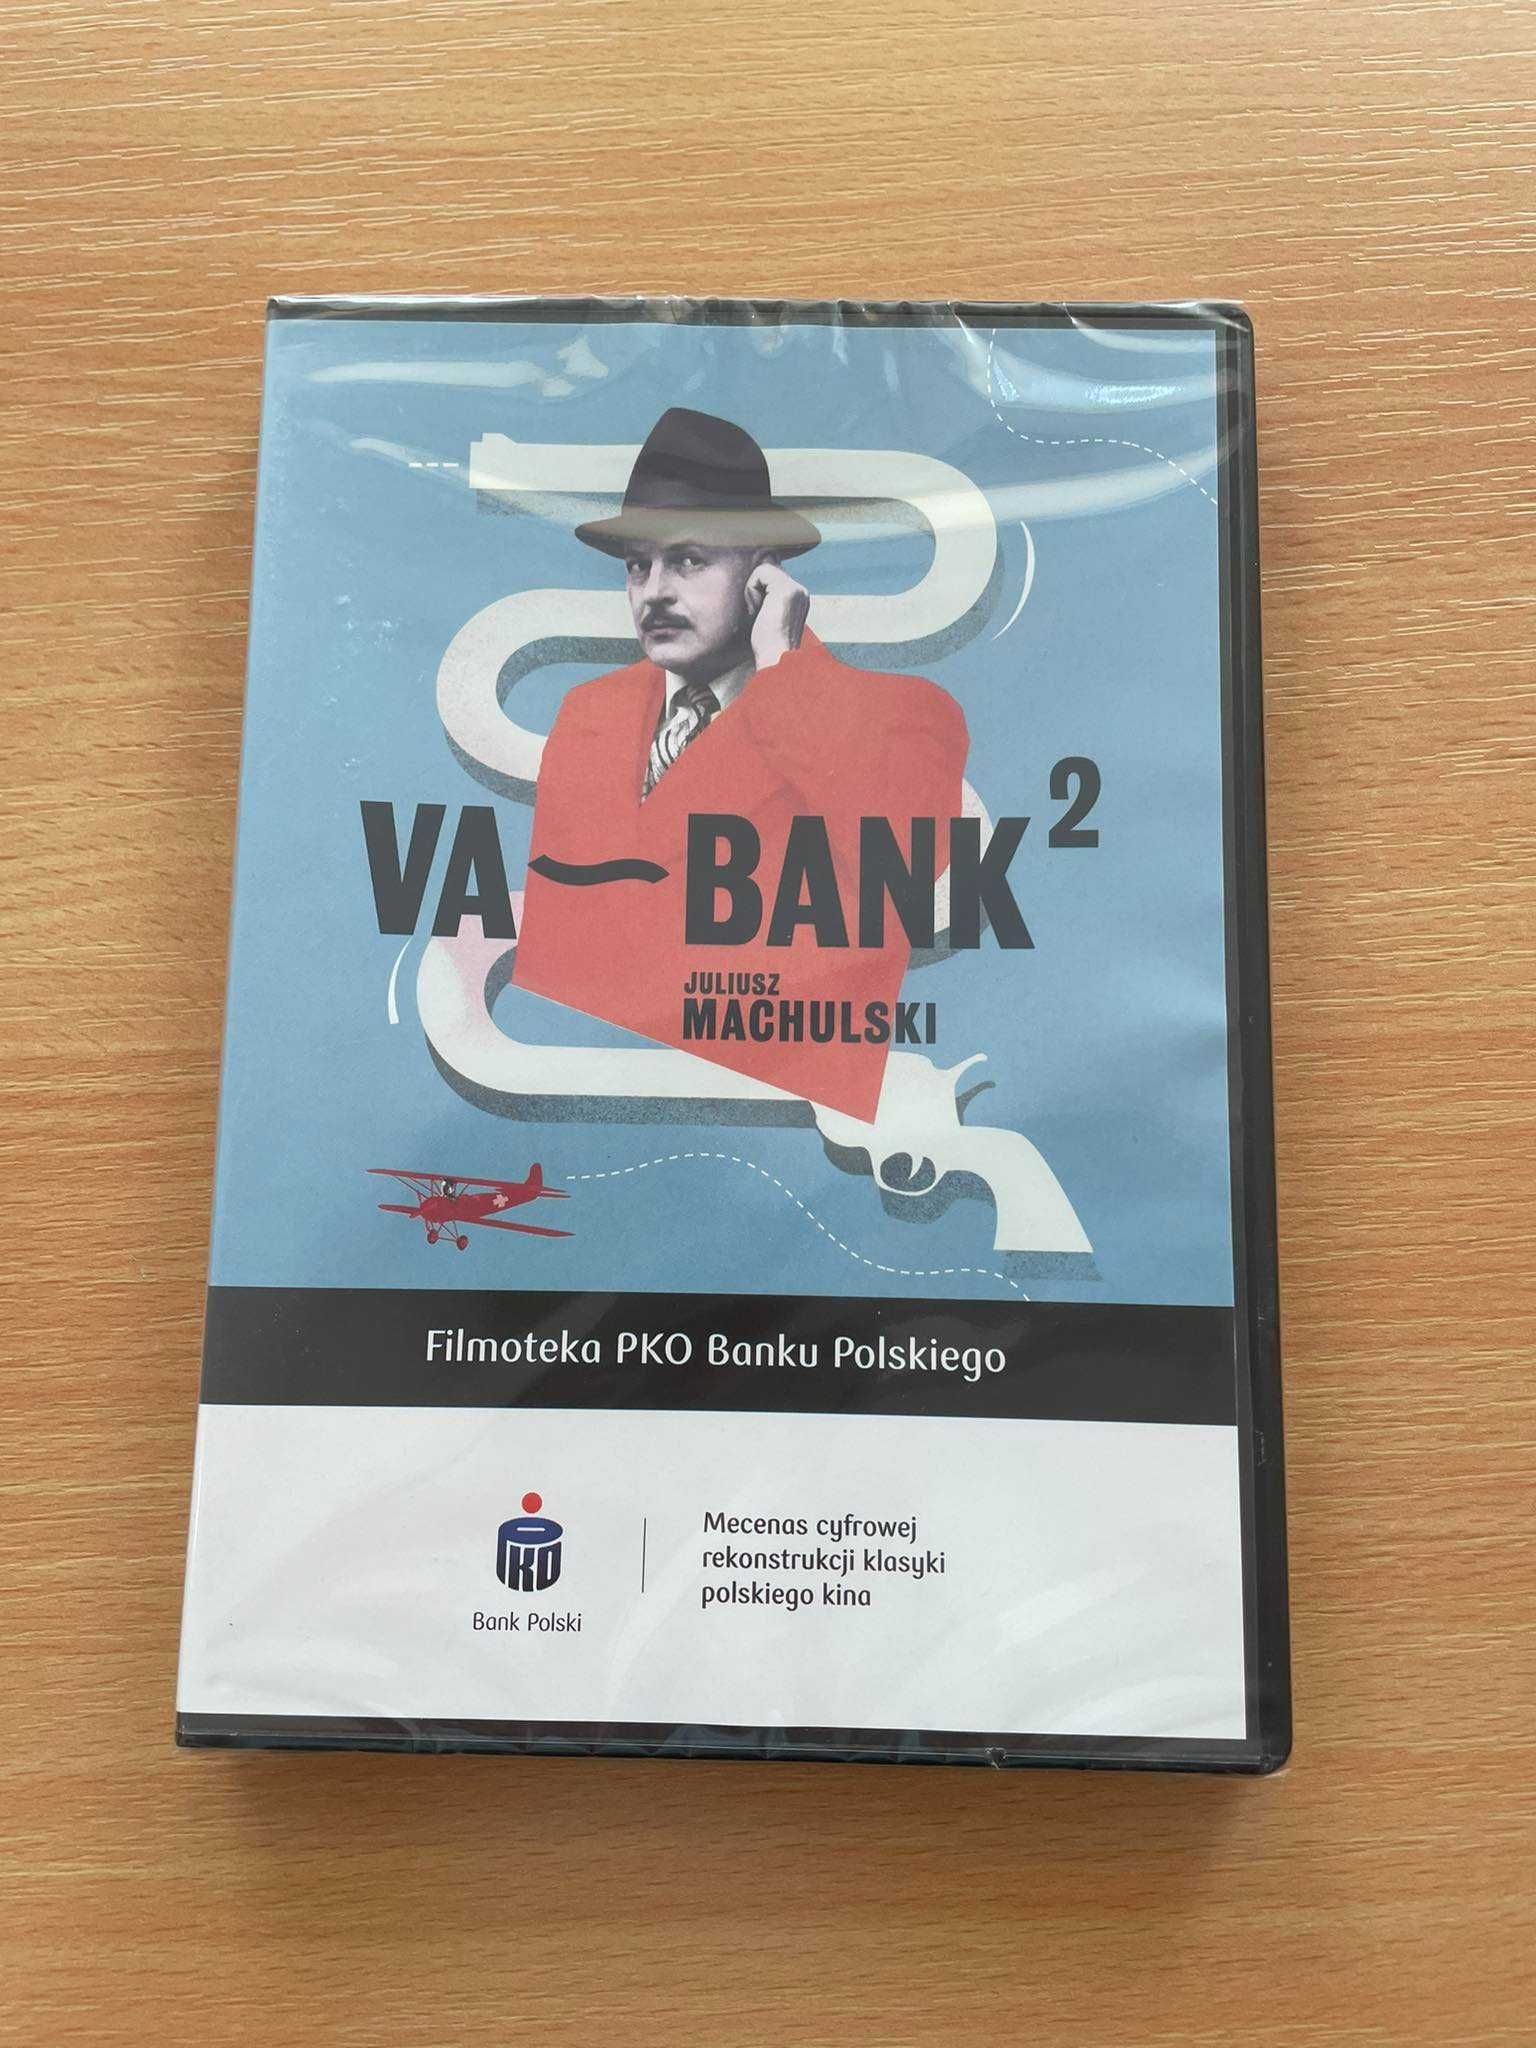 Film Vabank 2 czyli riposta płyta DVD Juliusz Machulski Rekonstrukcja